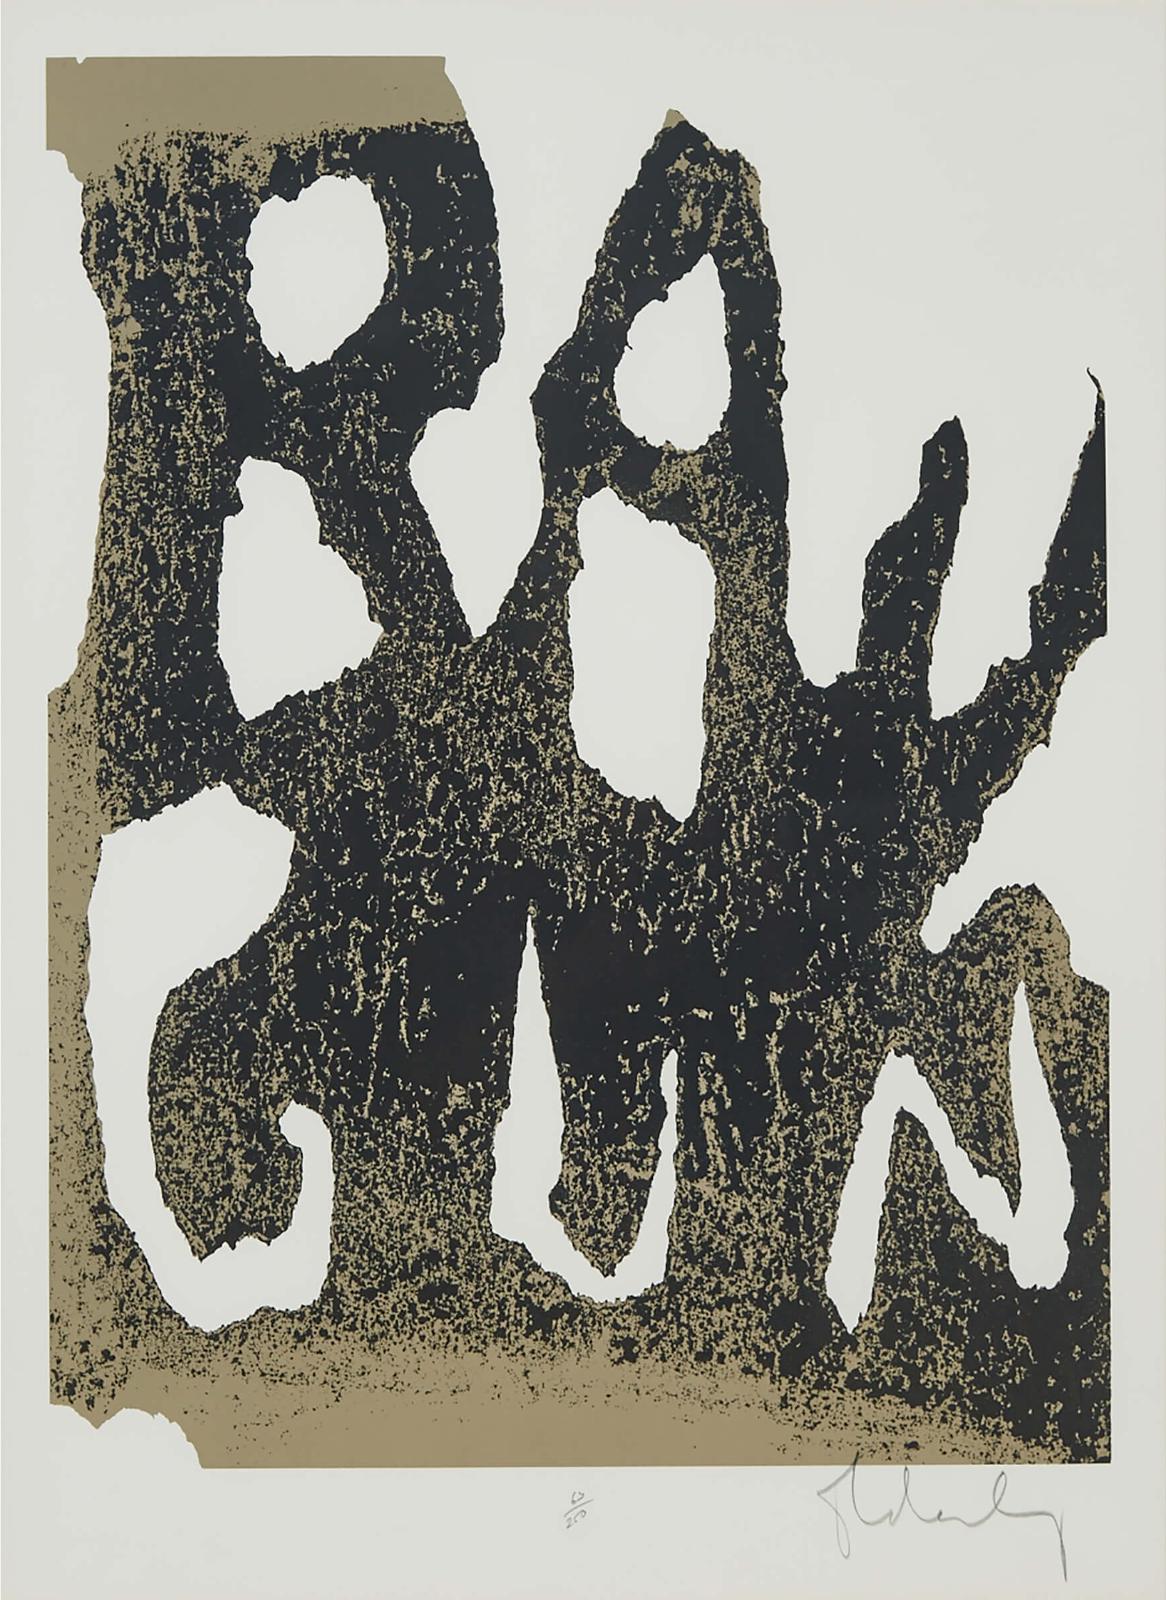 Claes Oldenburg (1929) - Ray Gun, 1972 [axsom-Platzker, 100]